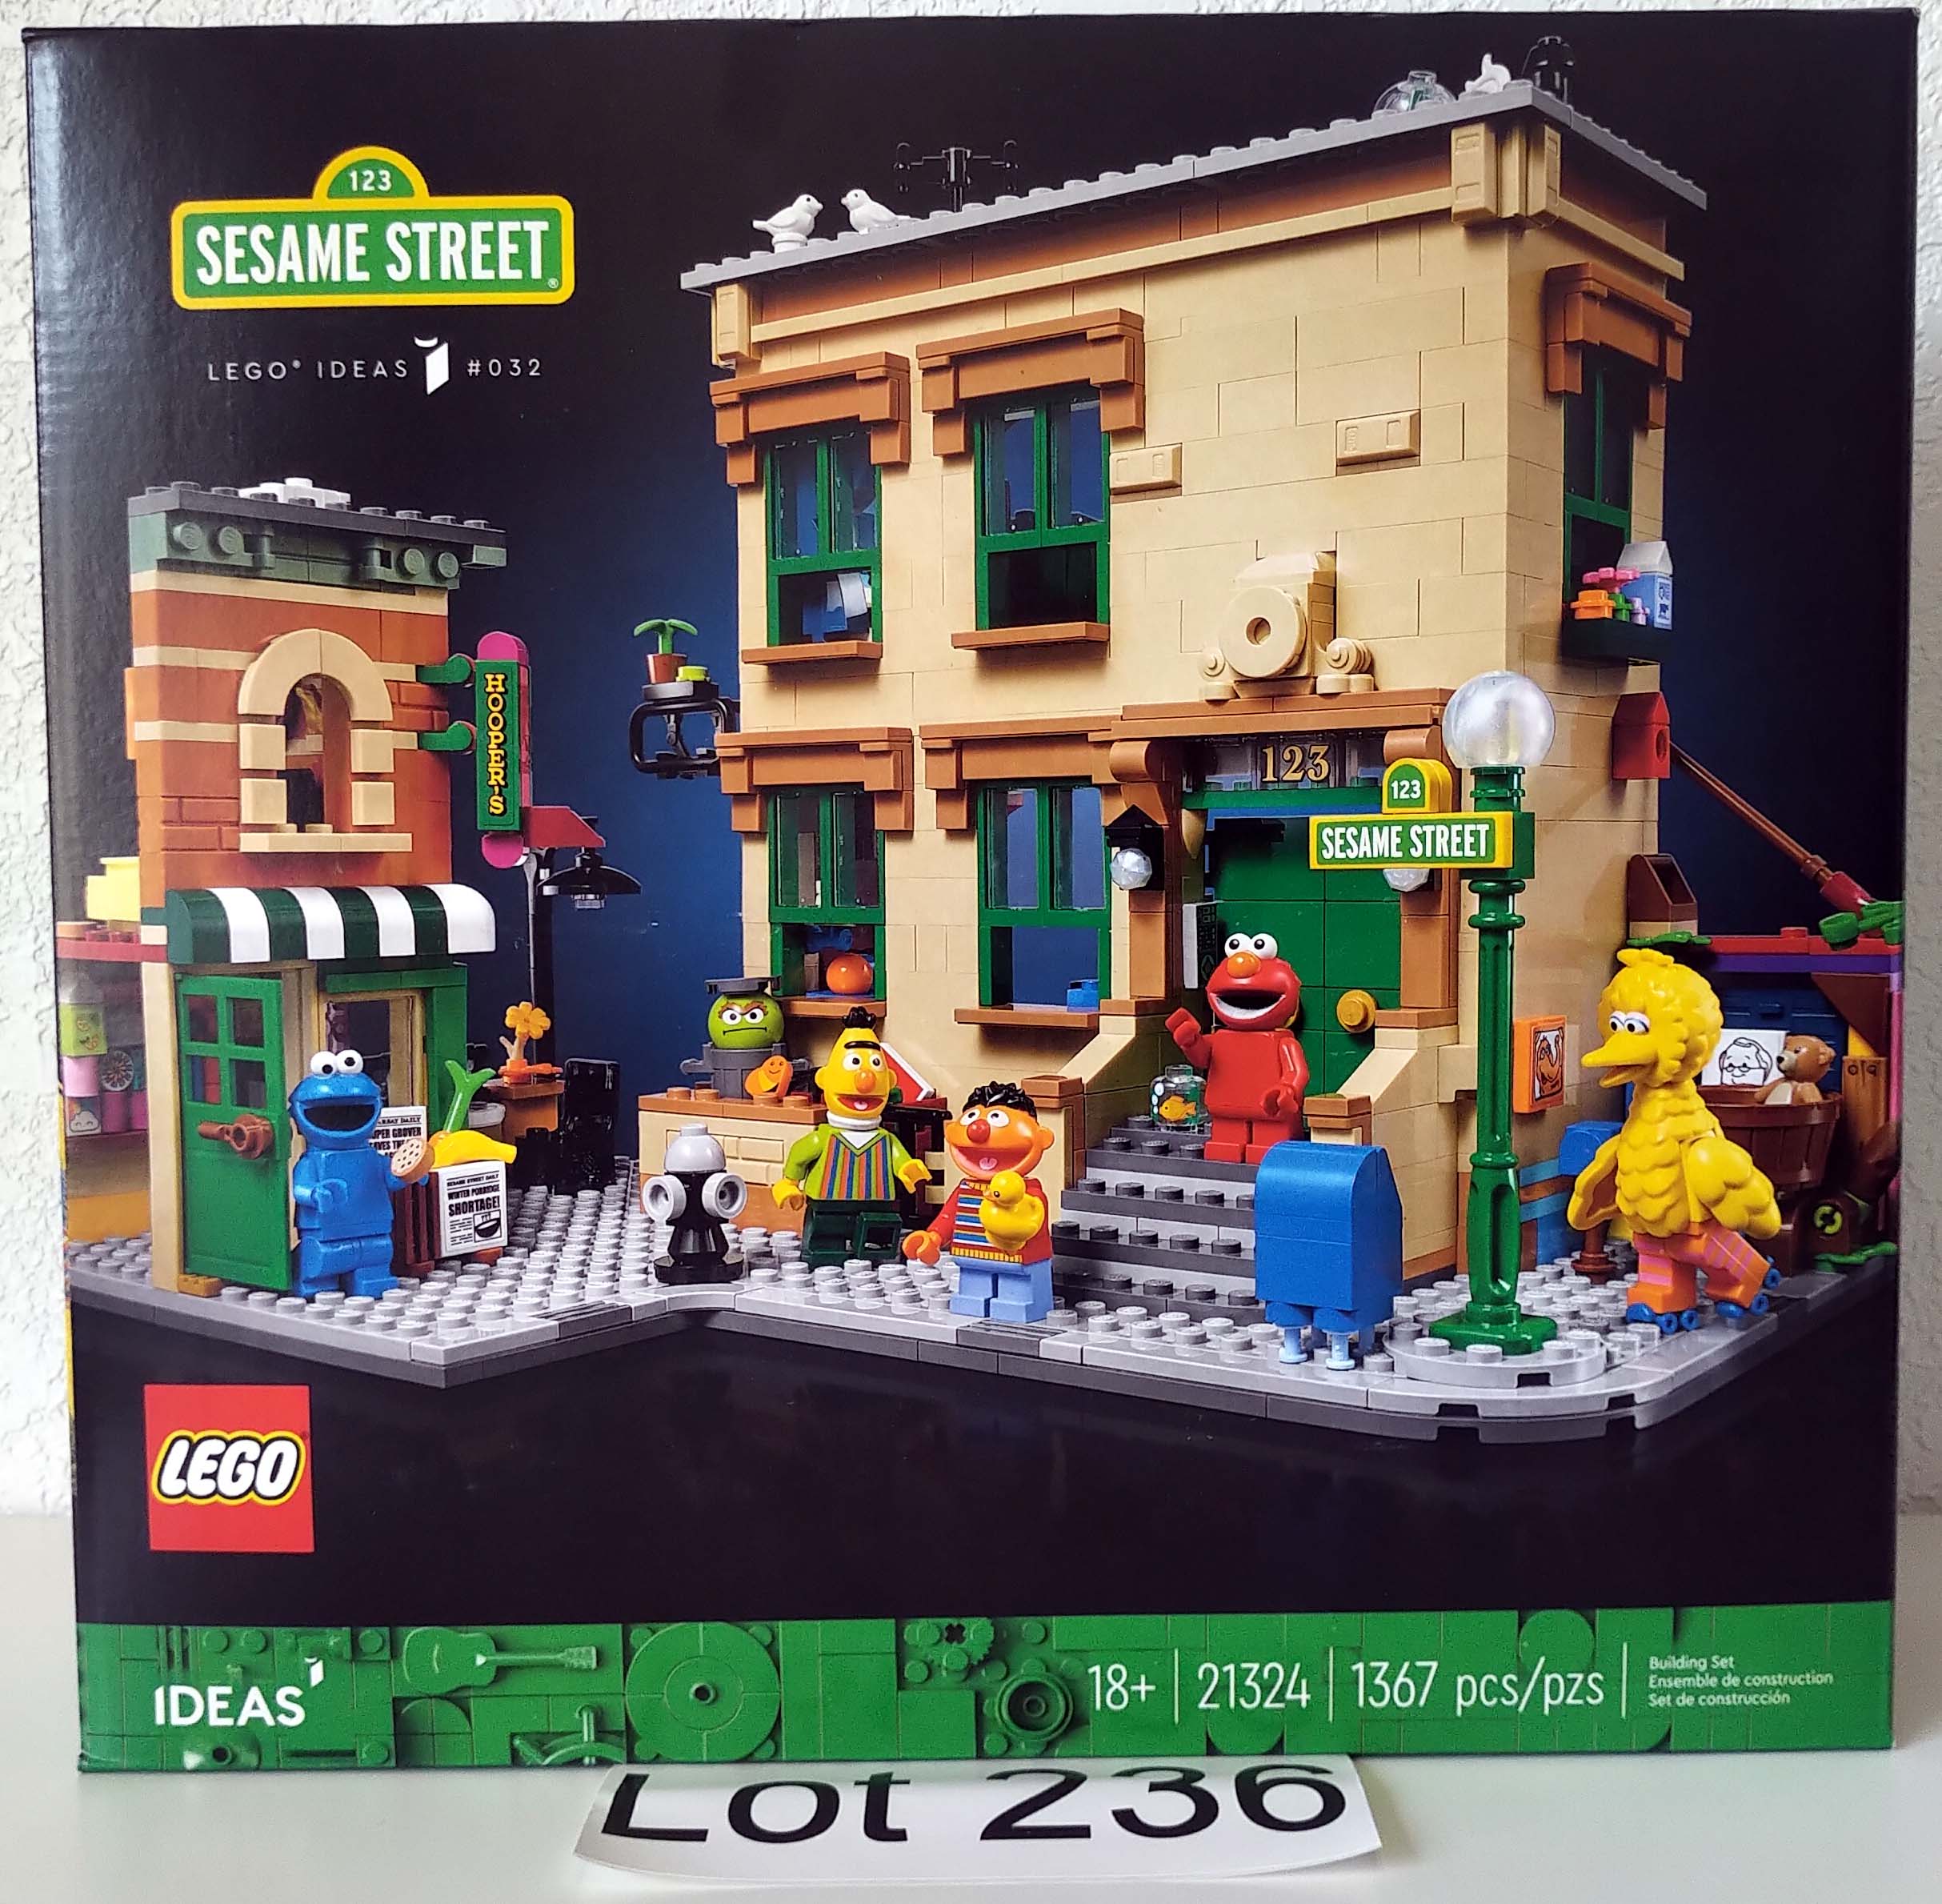 Sesame Street Lego 23124 - NiftyLocker.com Lot 236